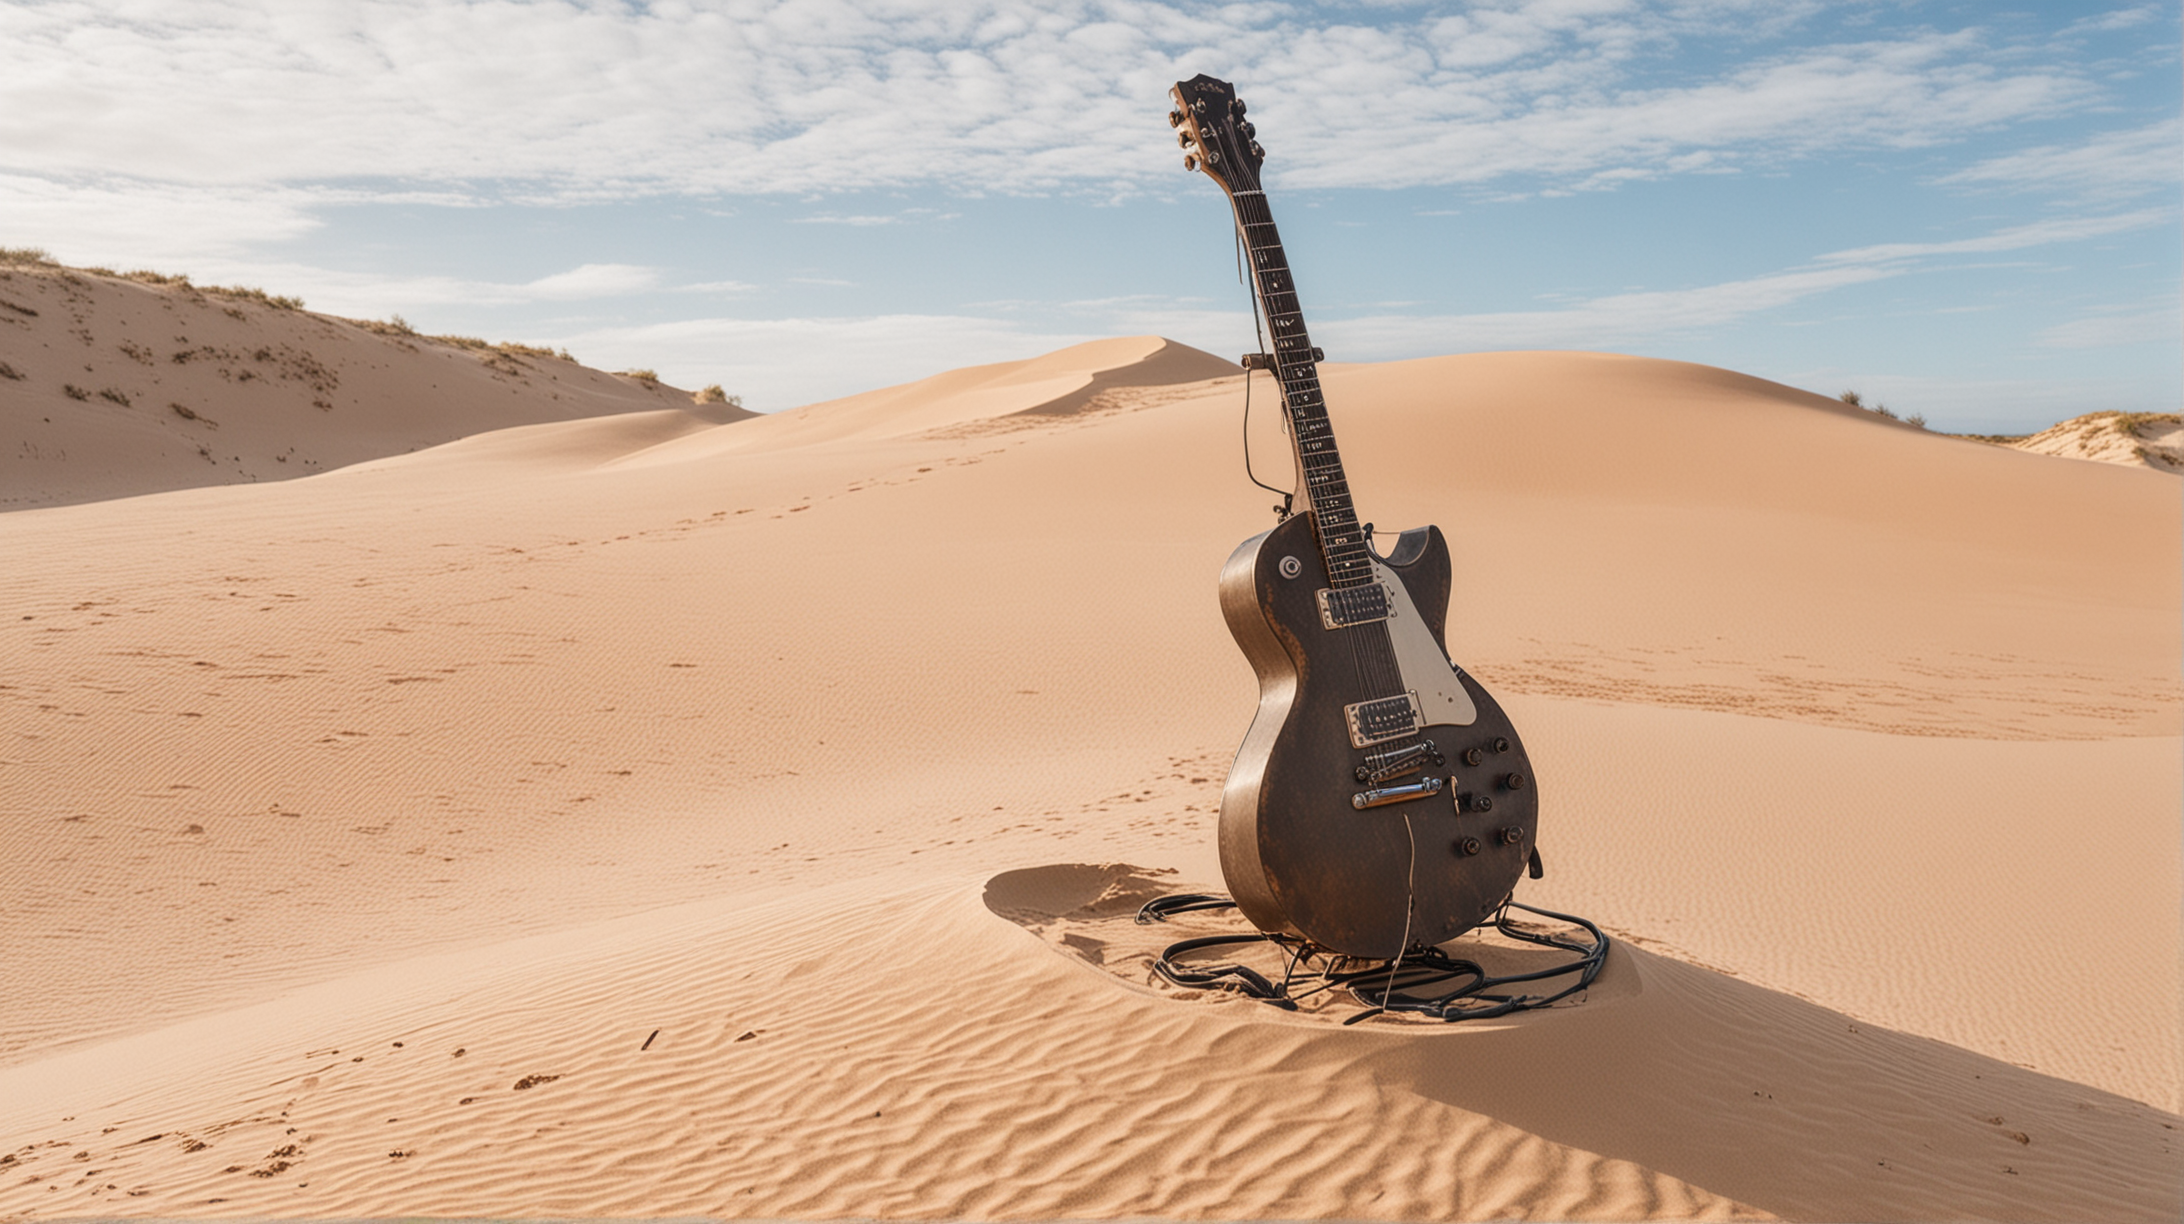 Metal Guitar Statue Standing Tall on Sand Dune